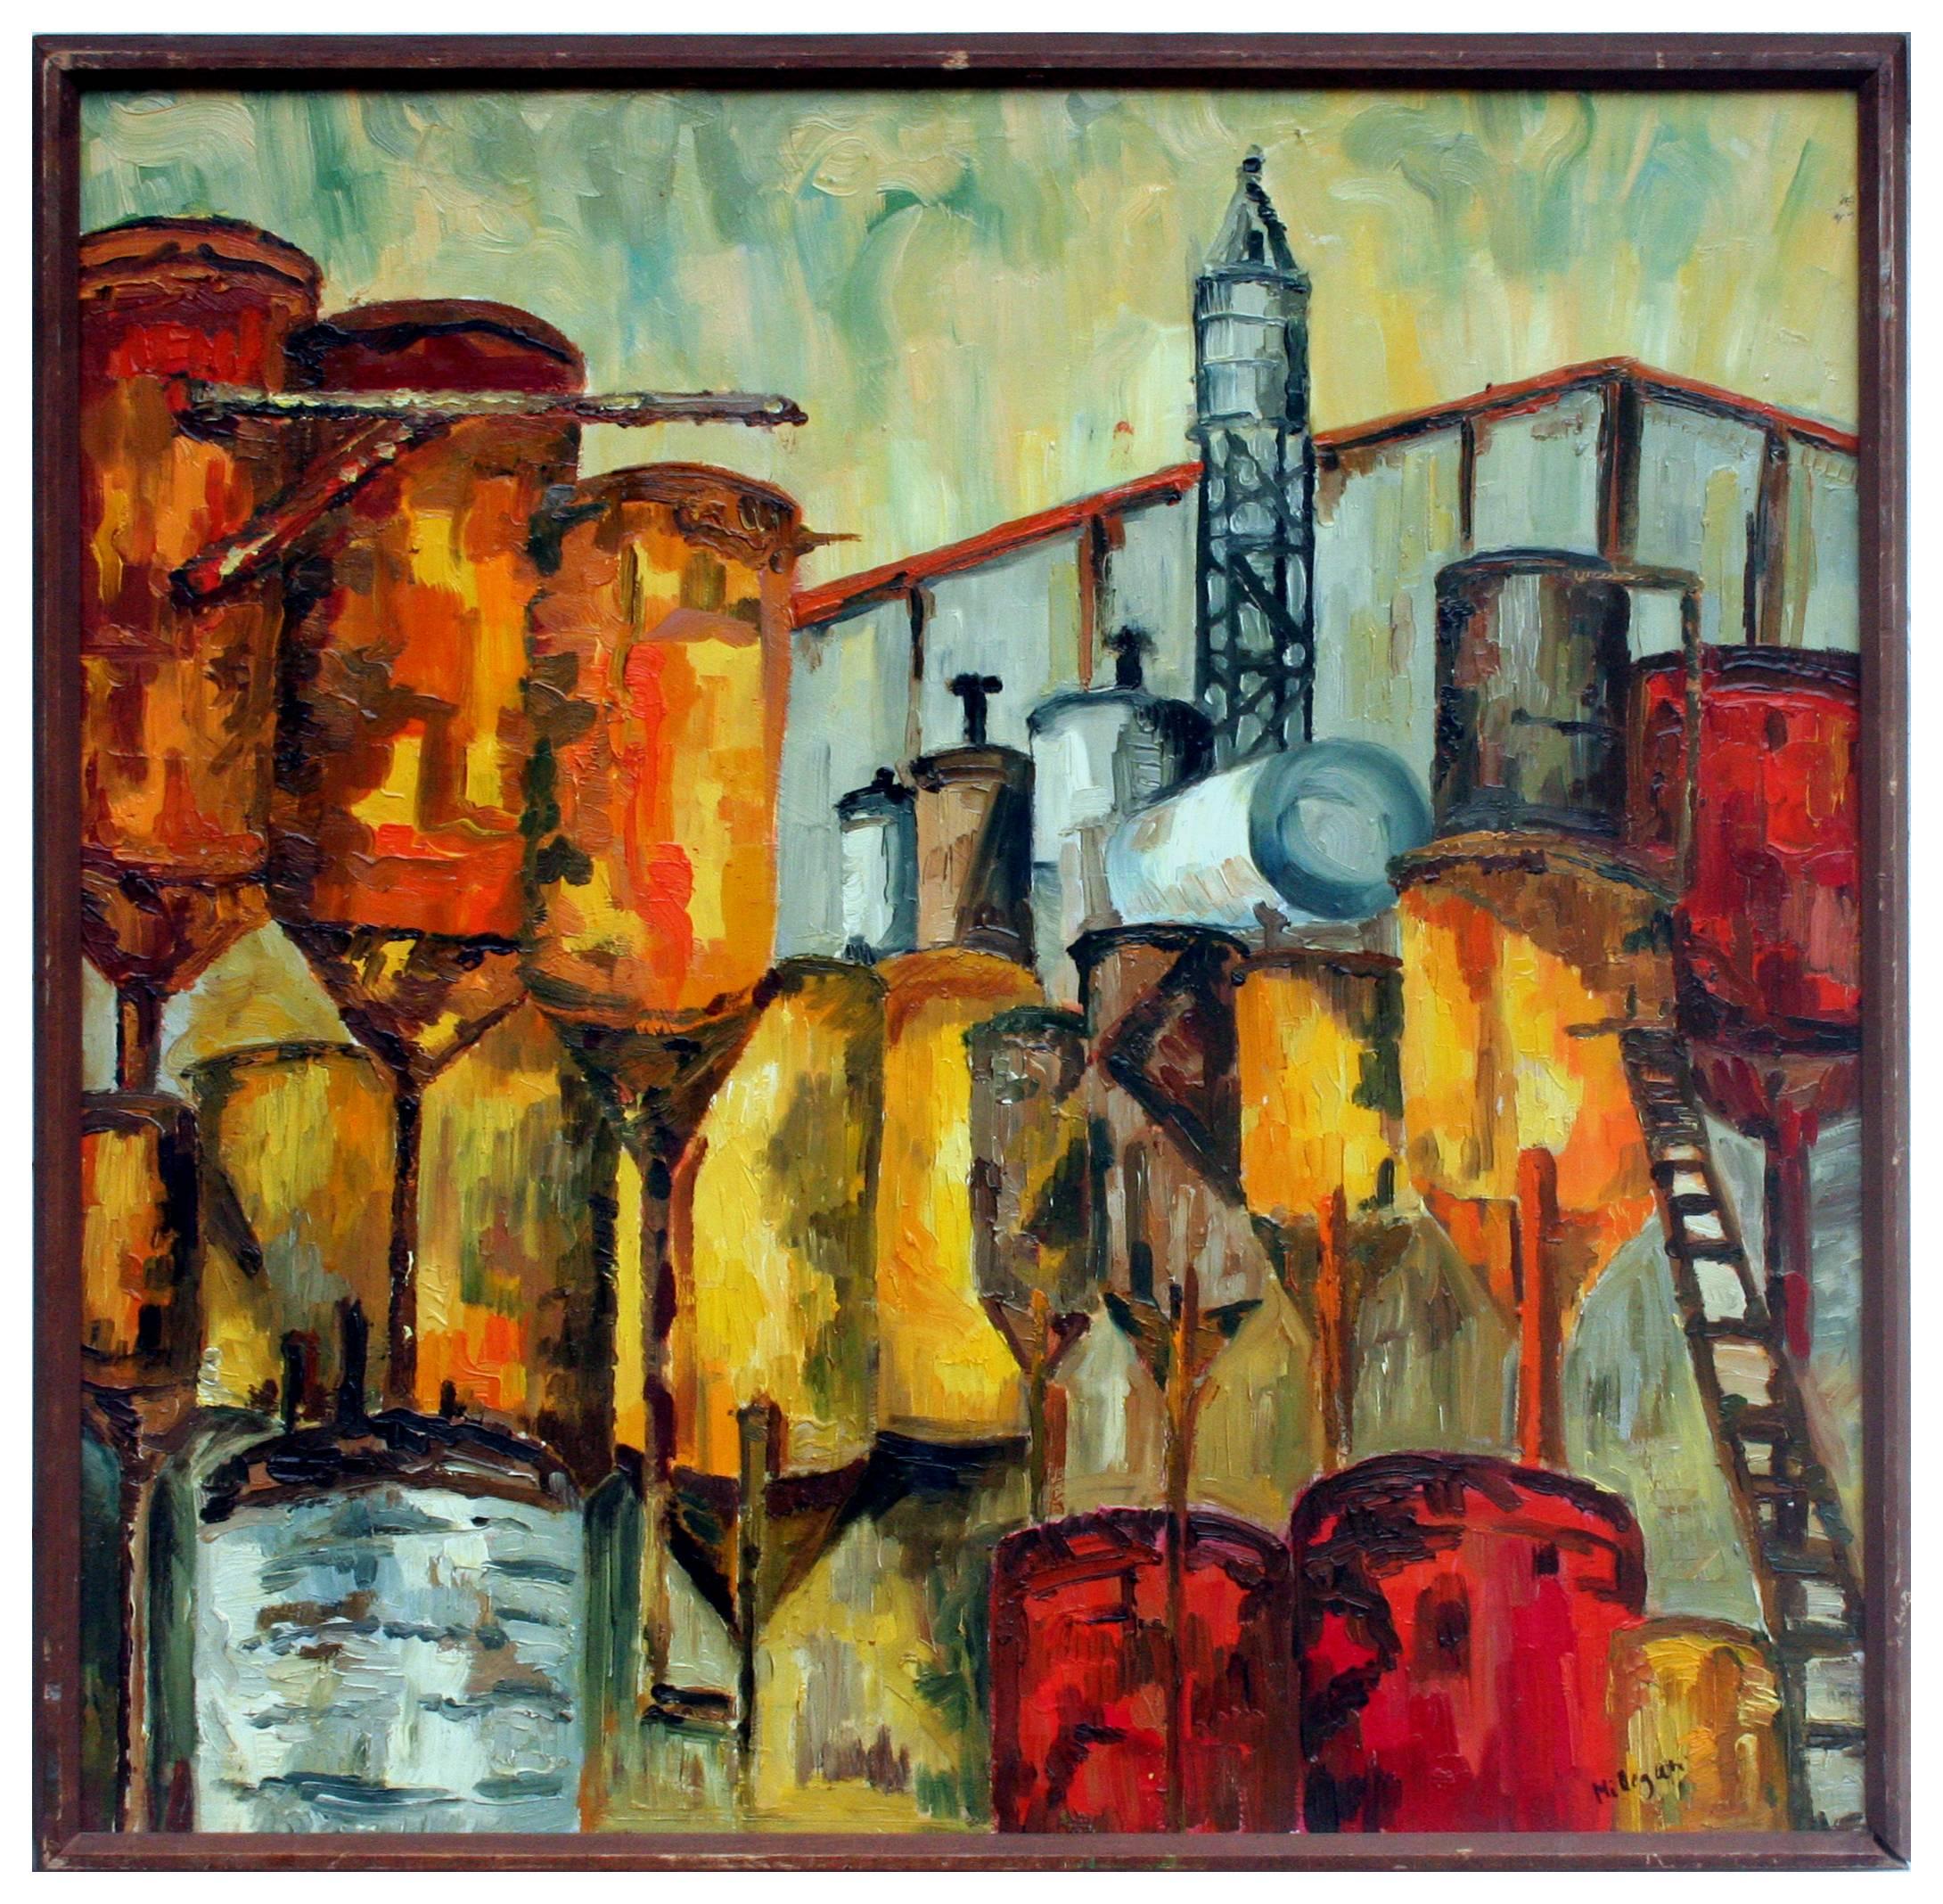 Cresanna Millegan Landscape Painting - Industrial Expressionism